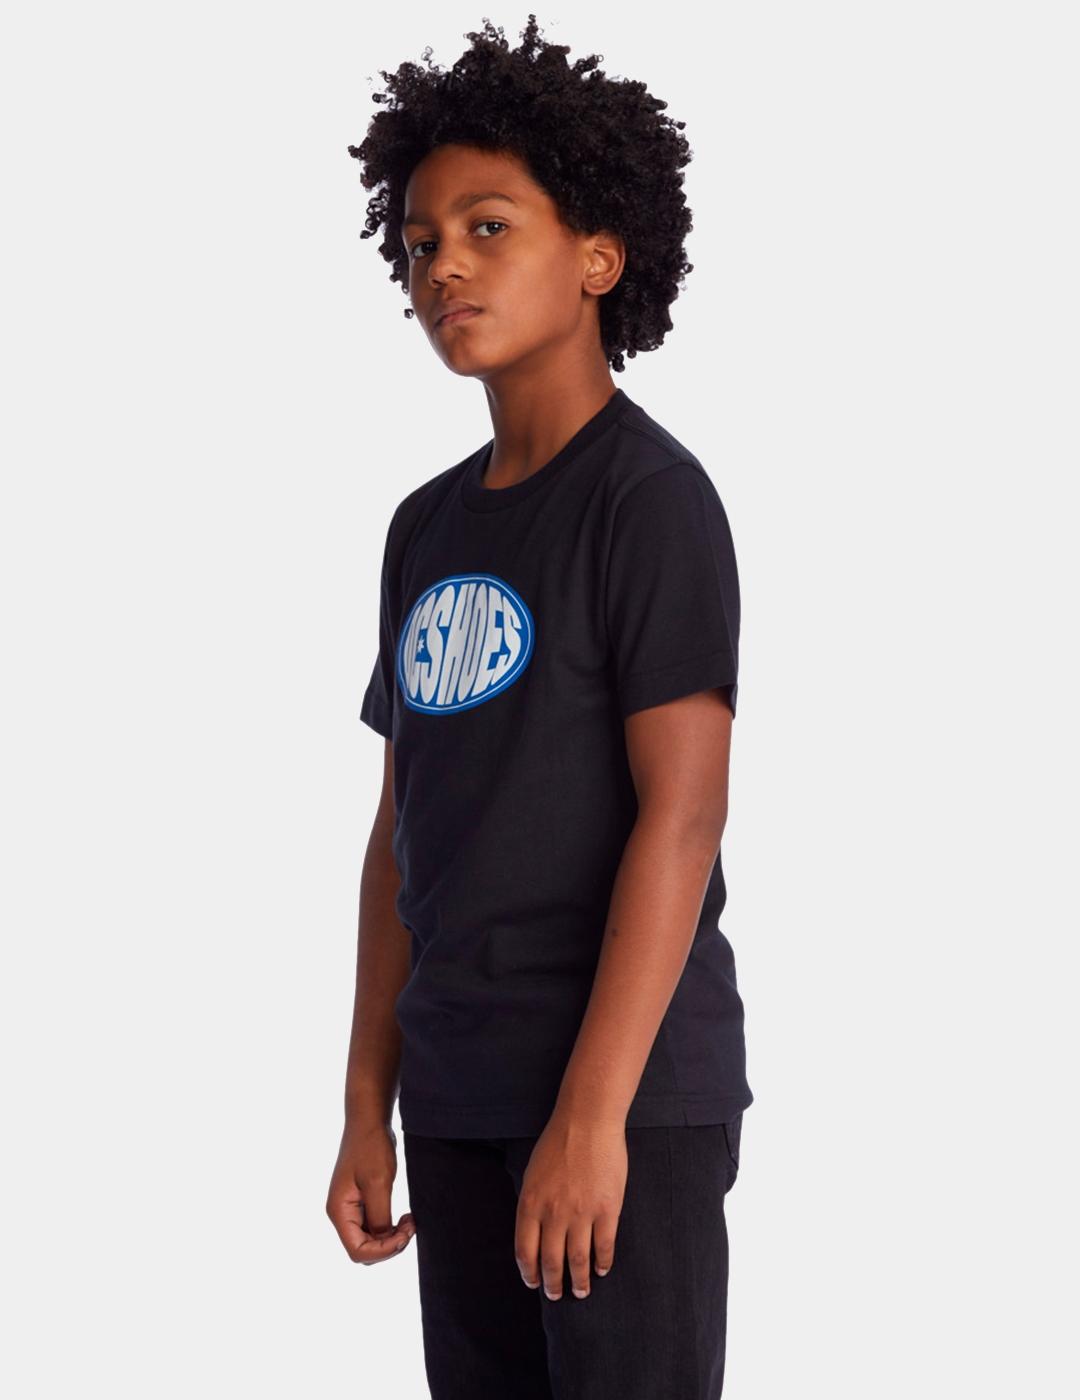 Camiseta DC SHOES EXPAND - Black (JUNIOR)